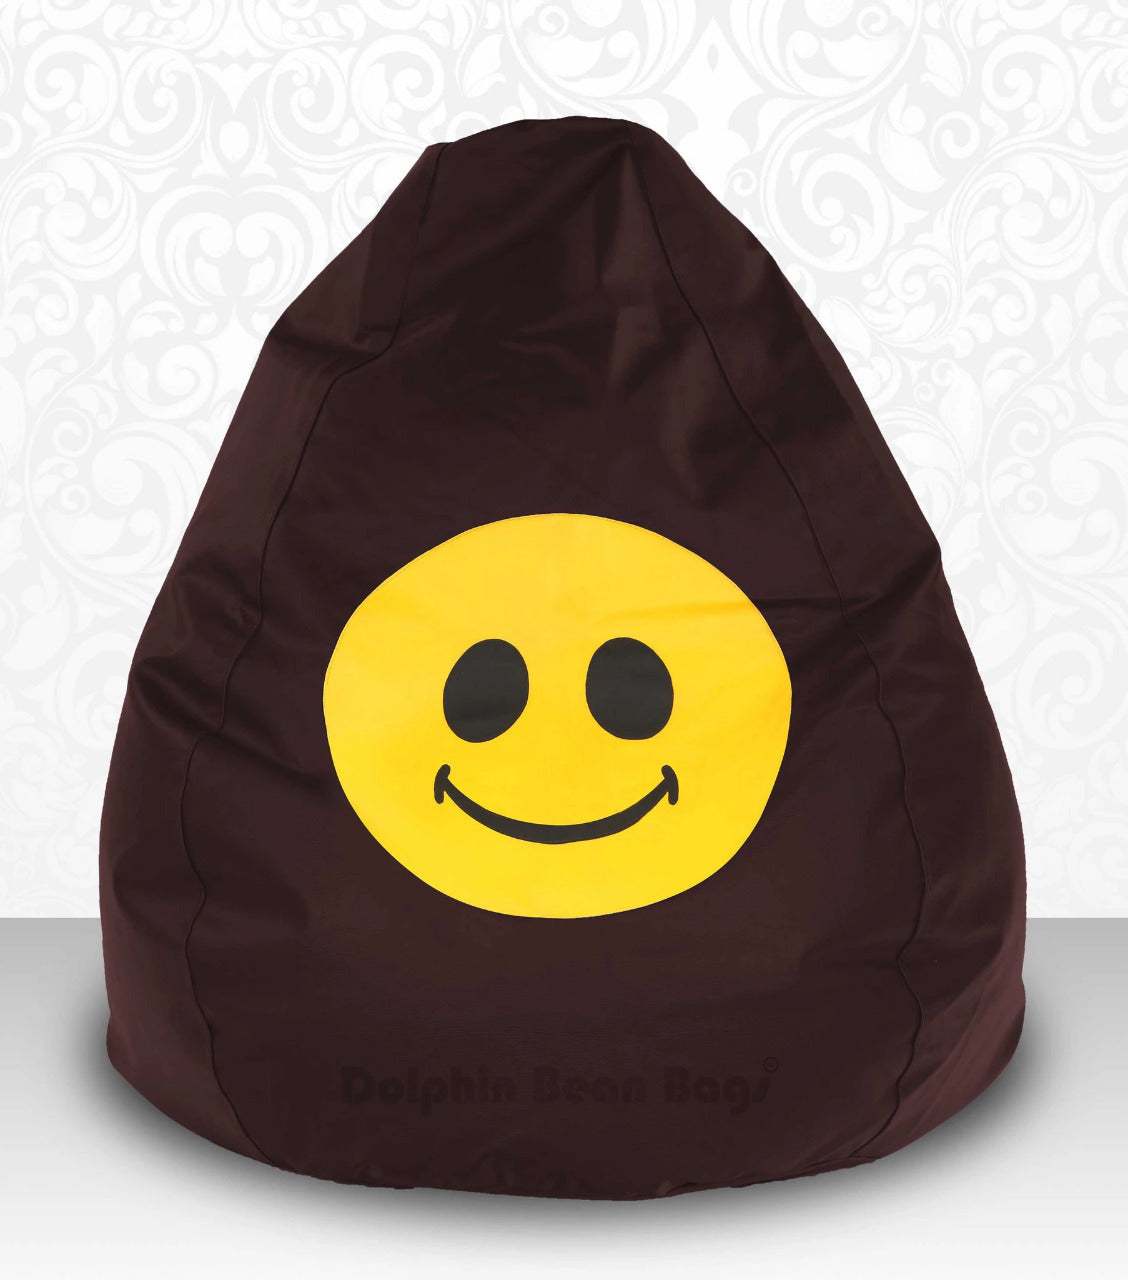 Bean Bag : XXXL Bean Bag Brown-Smiley-FILLED (with Beans)